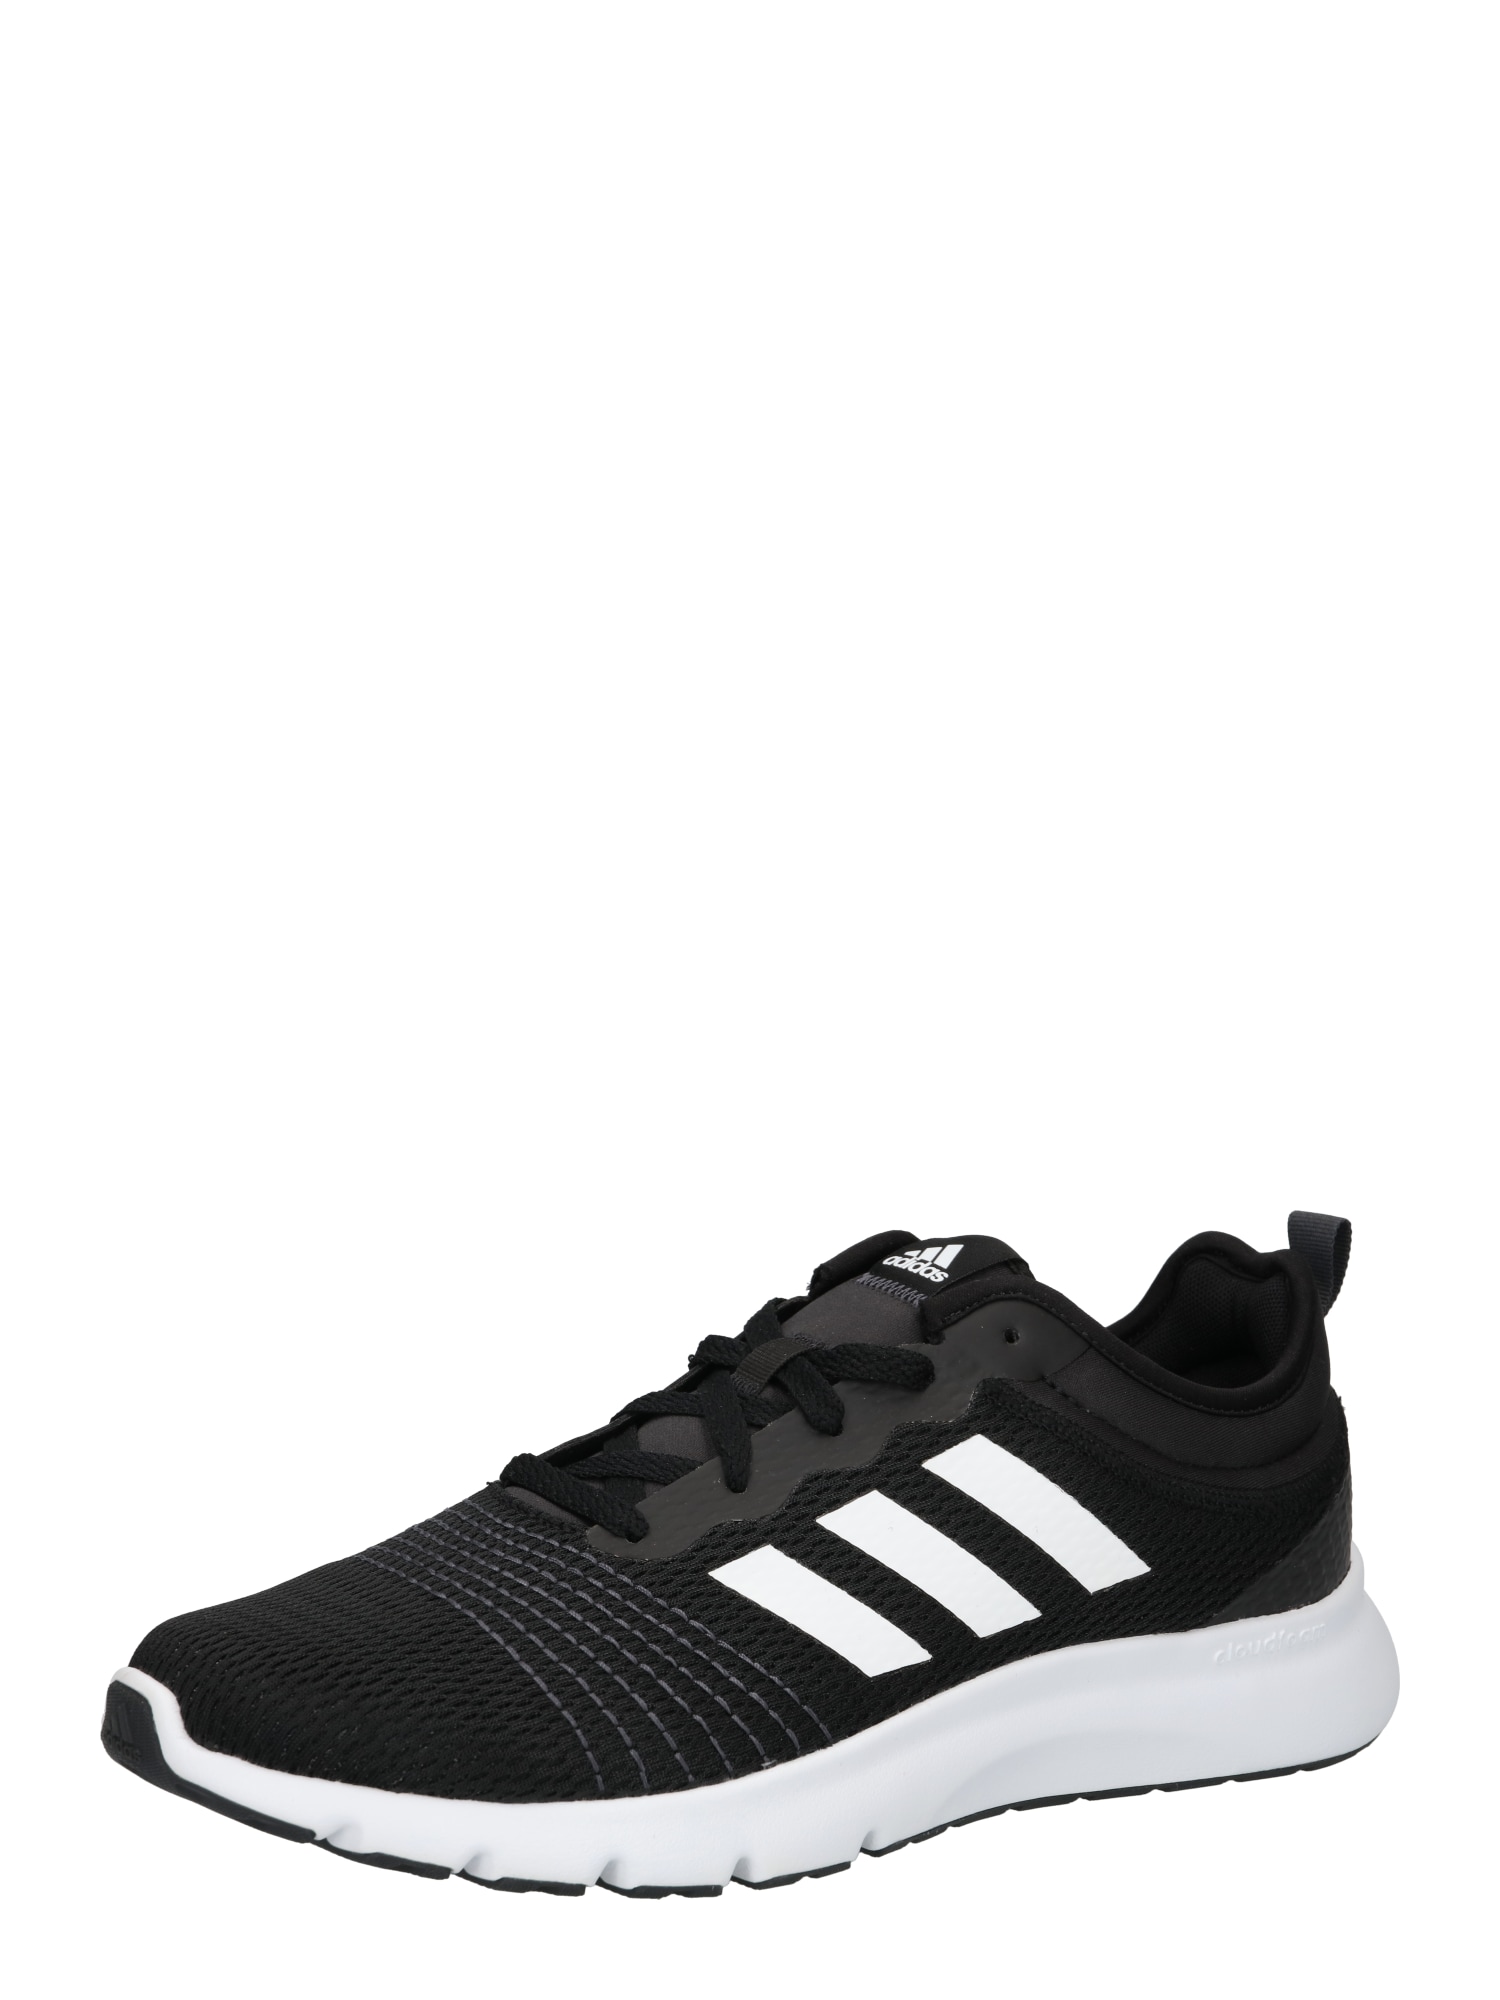 ADIDAS ORIGINALS Bėgimo batai juoda / balta